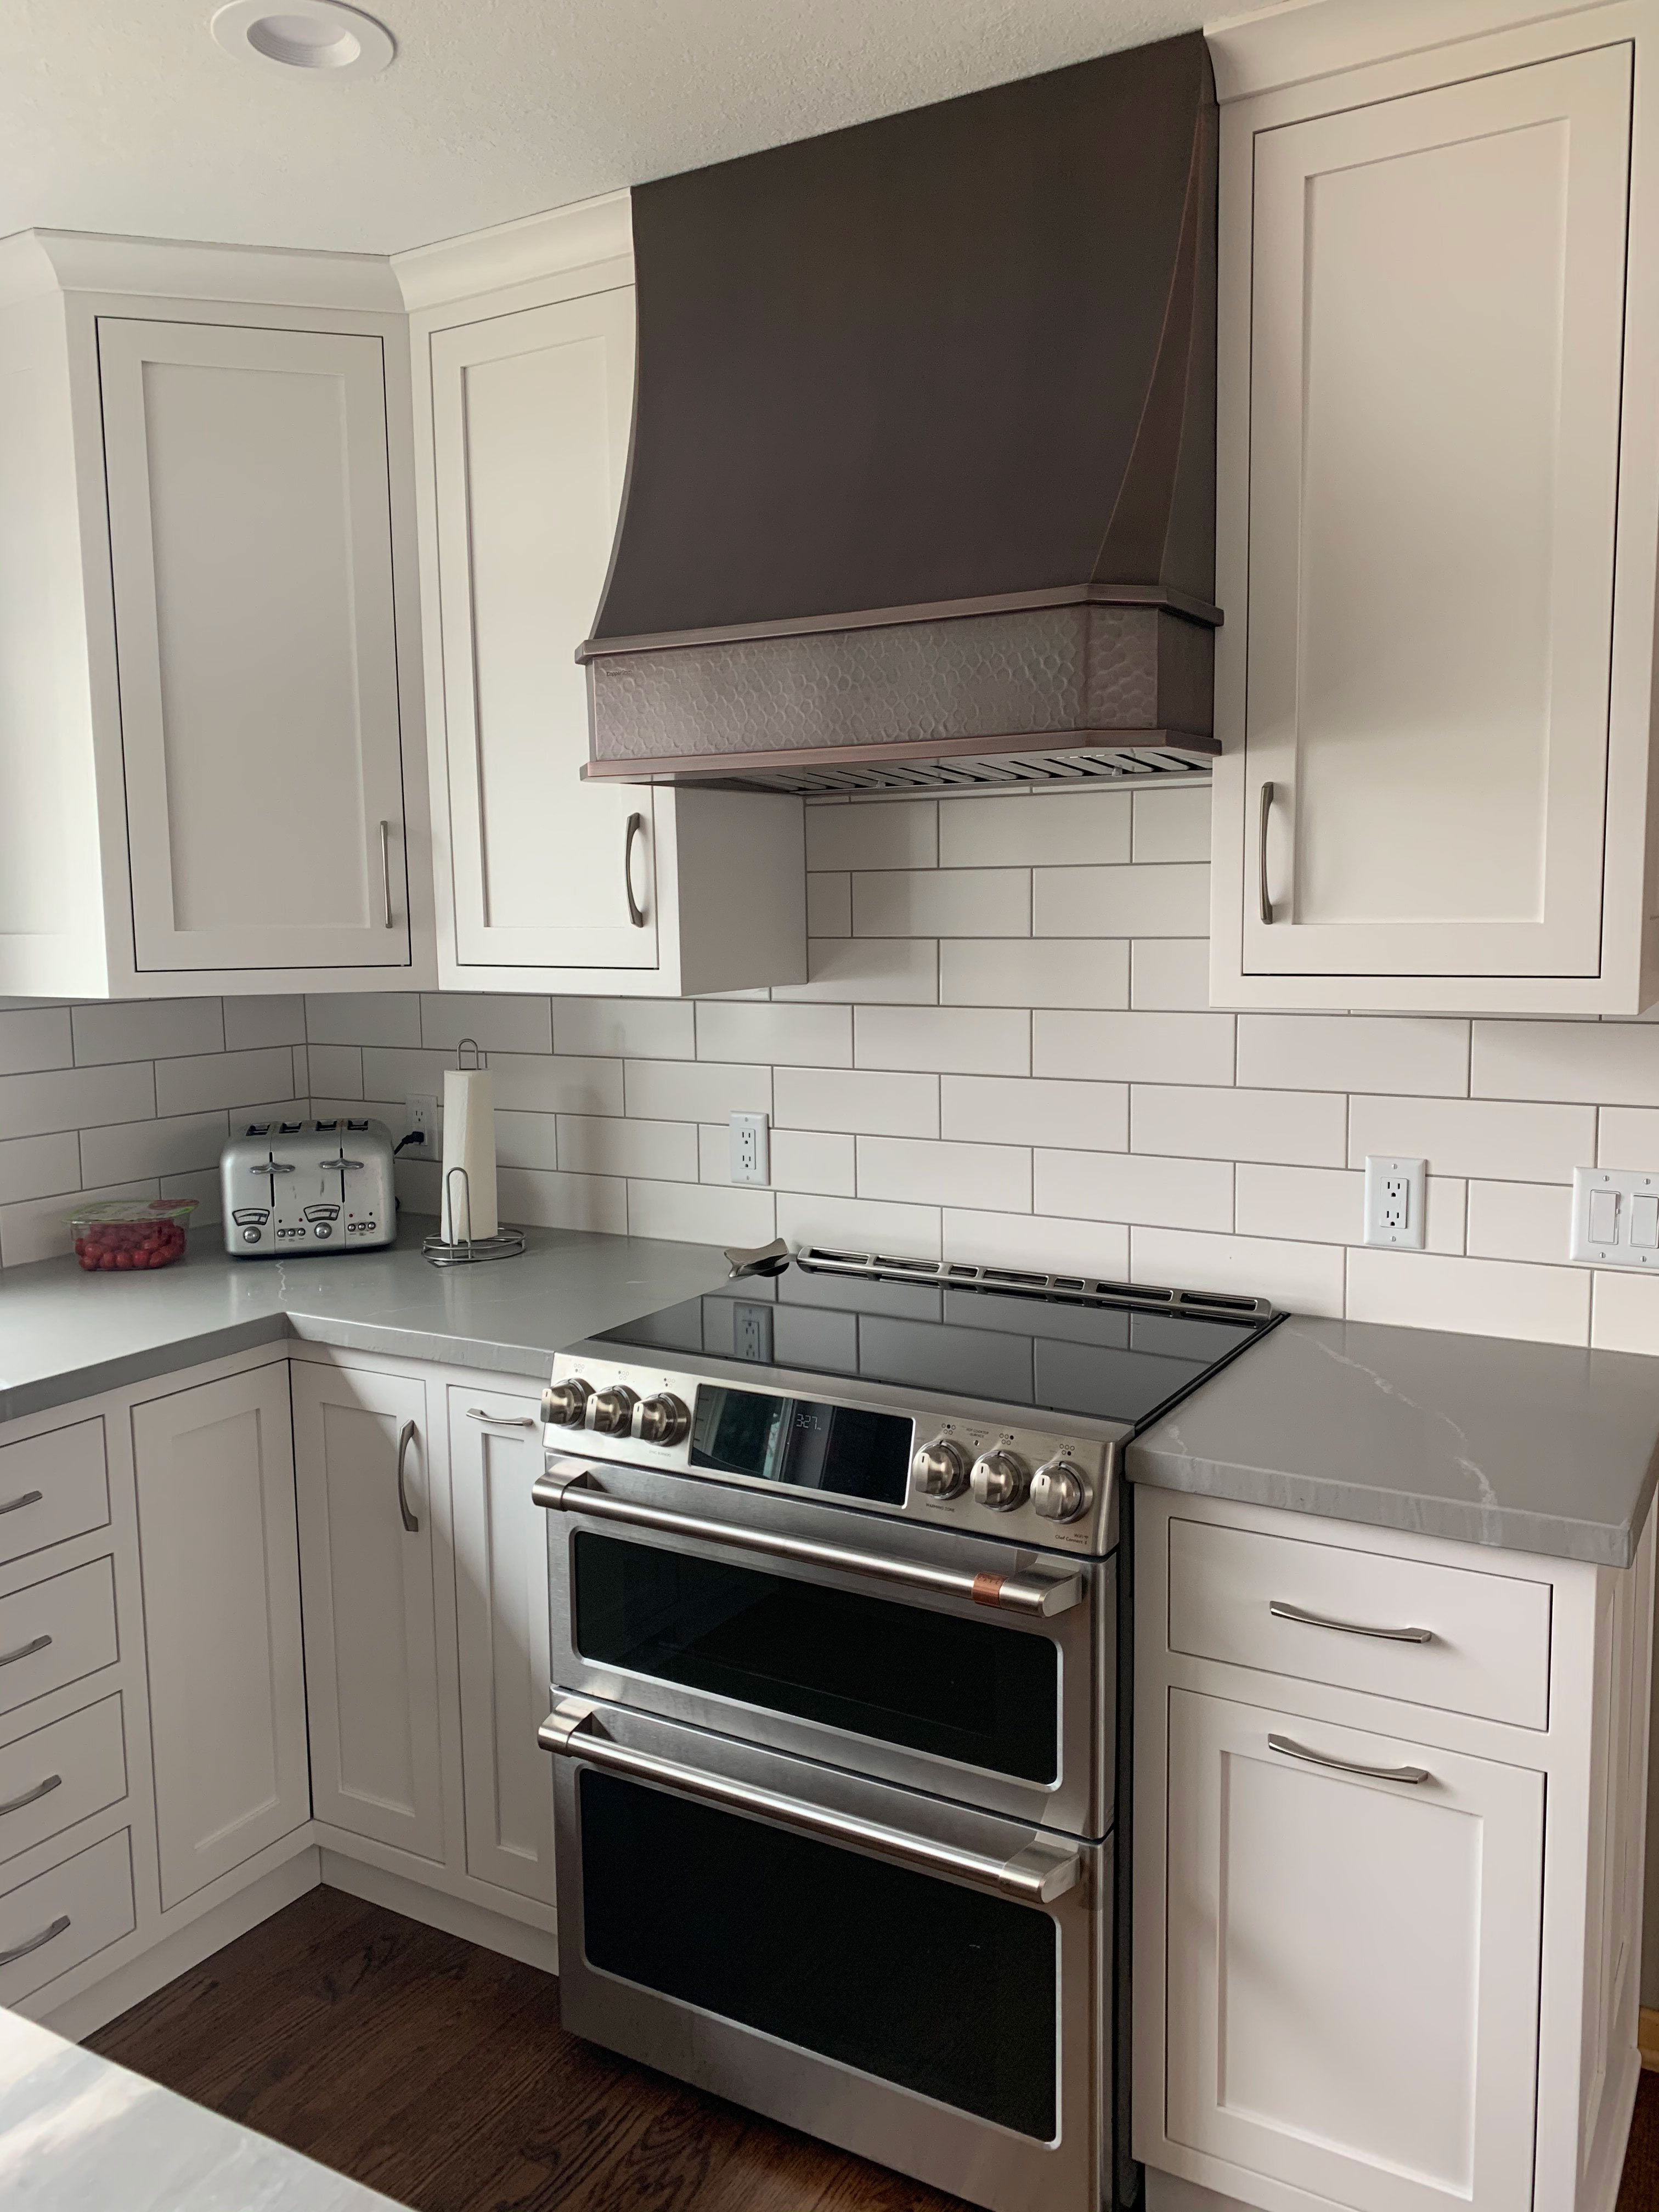 Inspiring kitchen design idea with the perfect range hood, white kitchen cabinets, quartz kitchen countertops, marble backsplash